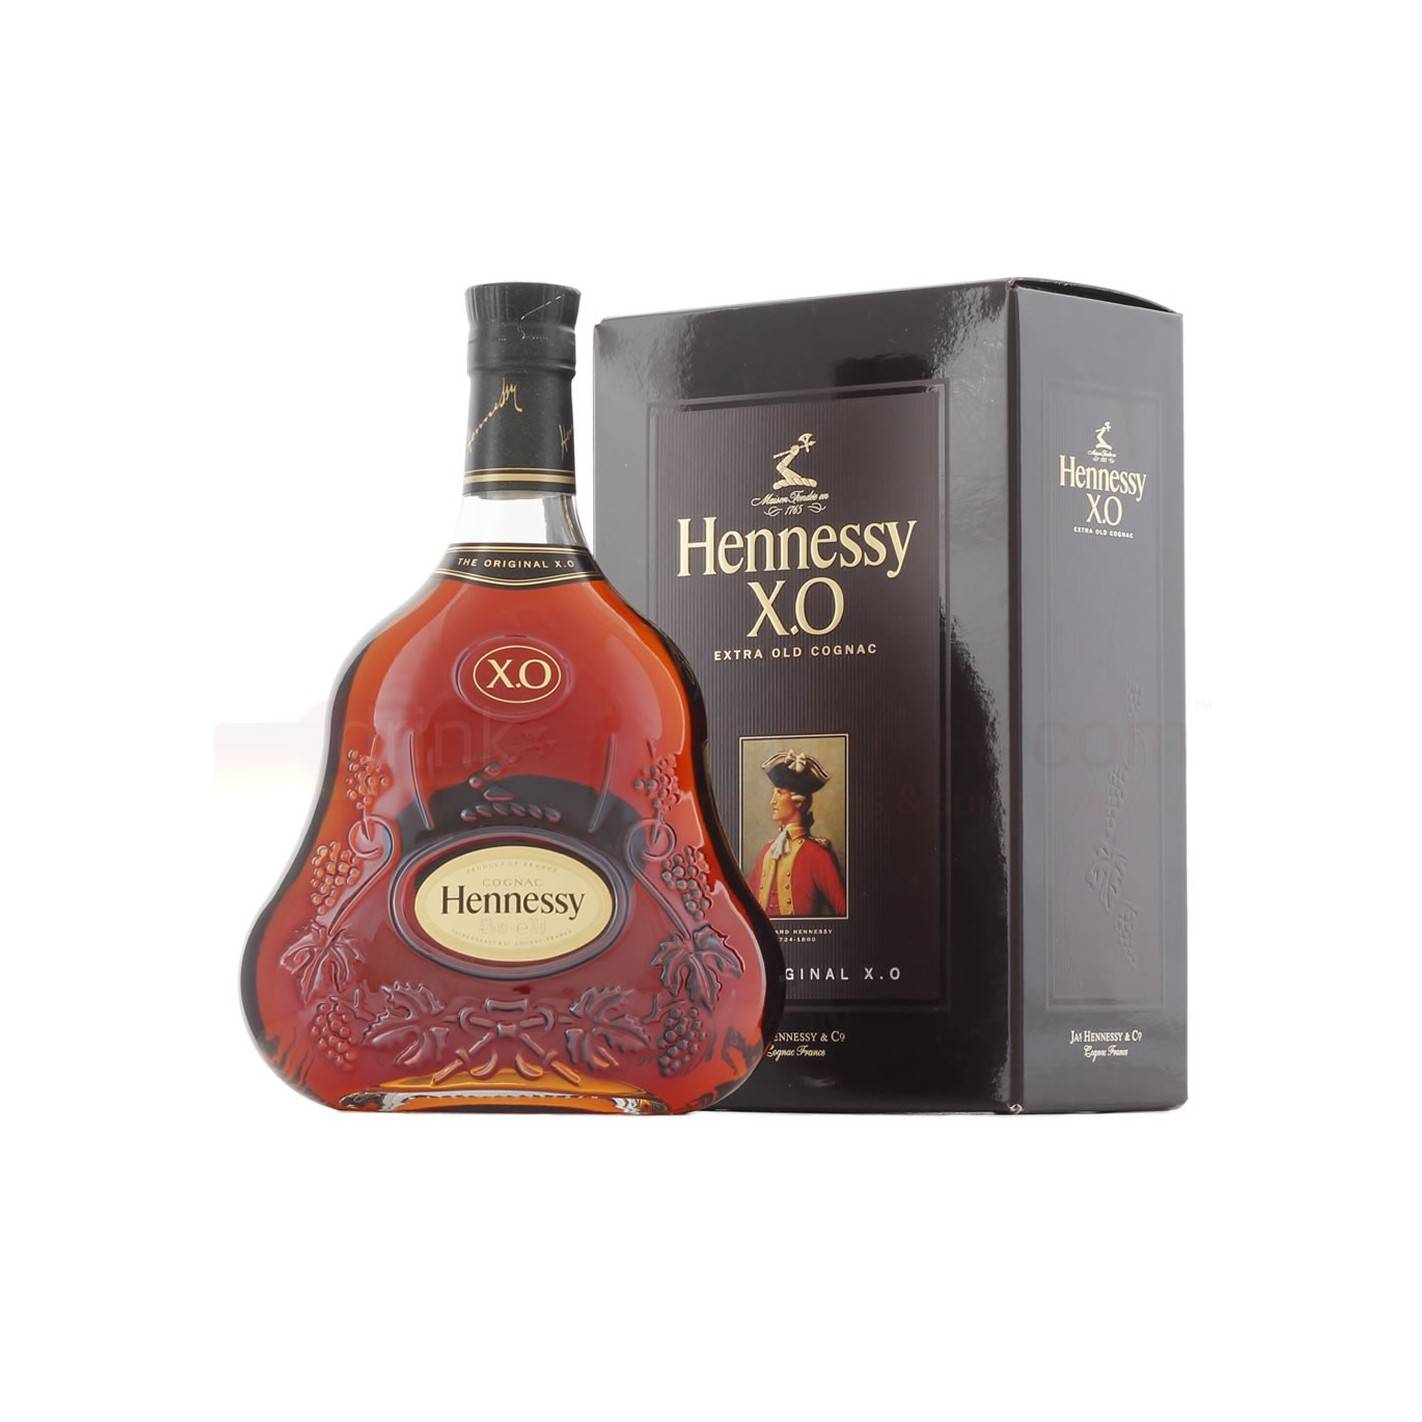 Hennessy cognac цена. Виски Хеннесси Хо. Хеннесси 0.5. Хеннесси XO Экстра Олд Cognac. Французские коньяки Хеннесси Хо.